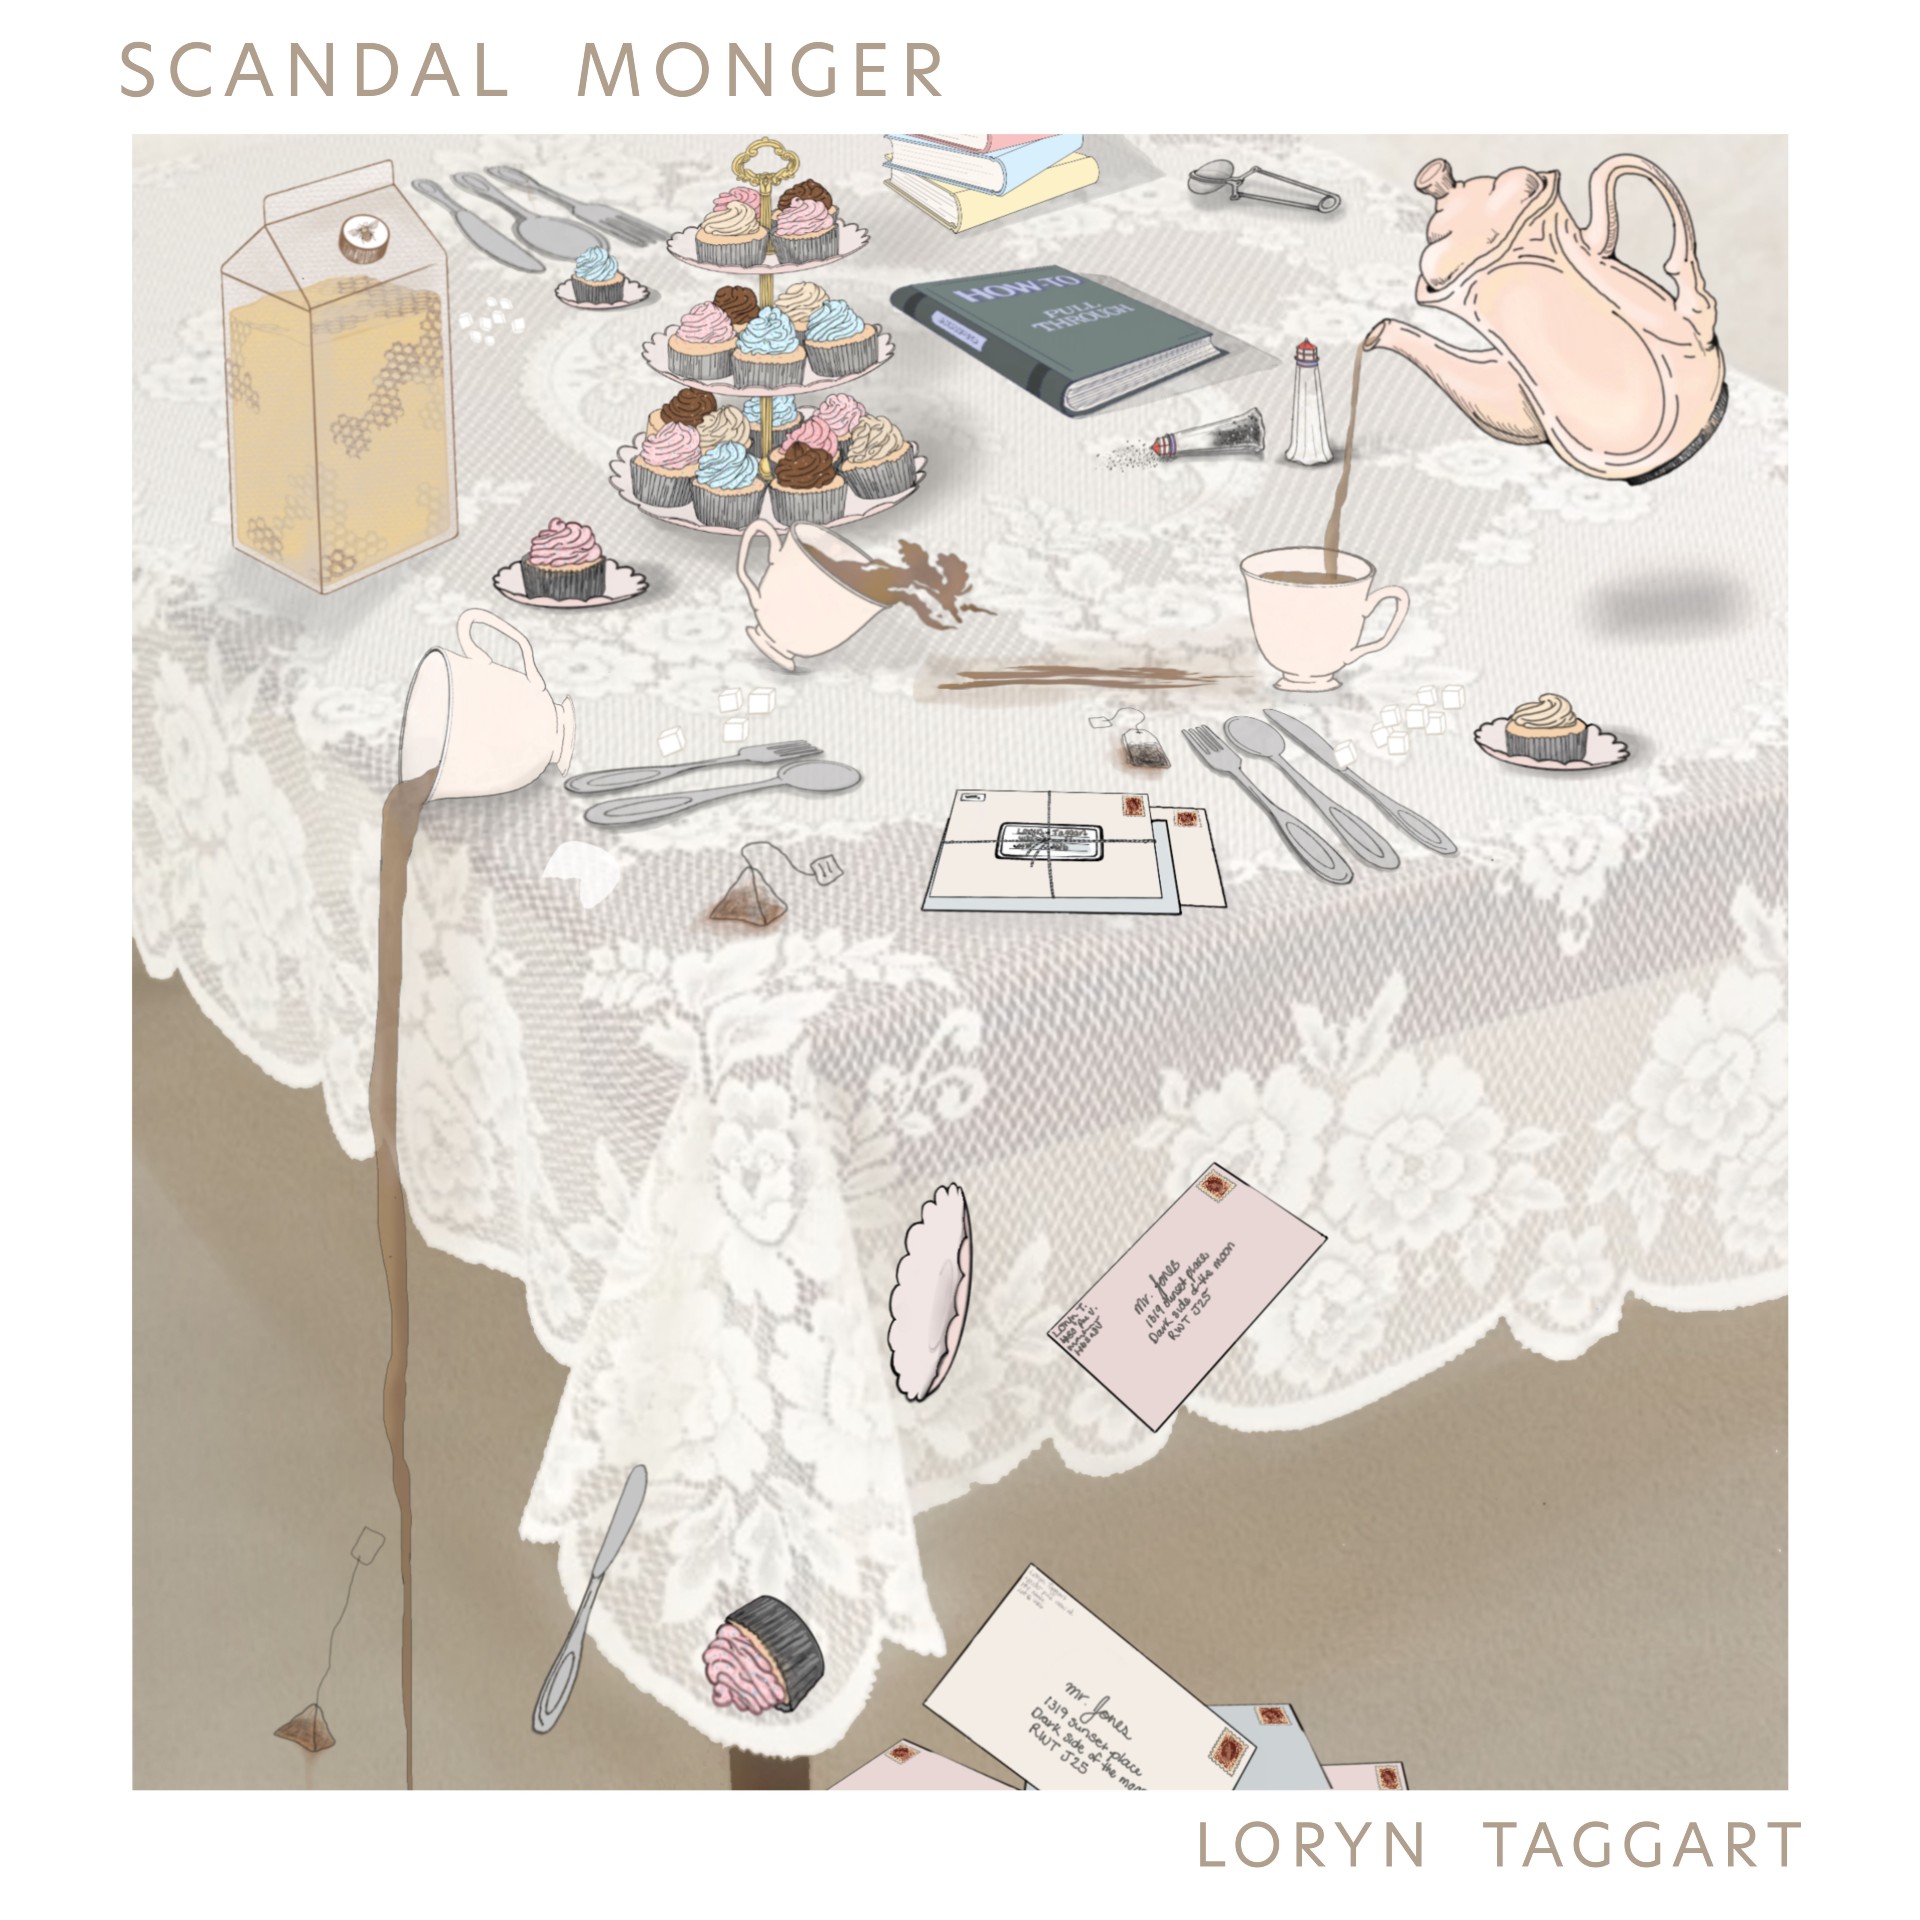 Loryn Taggart “Scandal Monger” single artwork